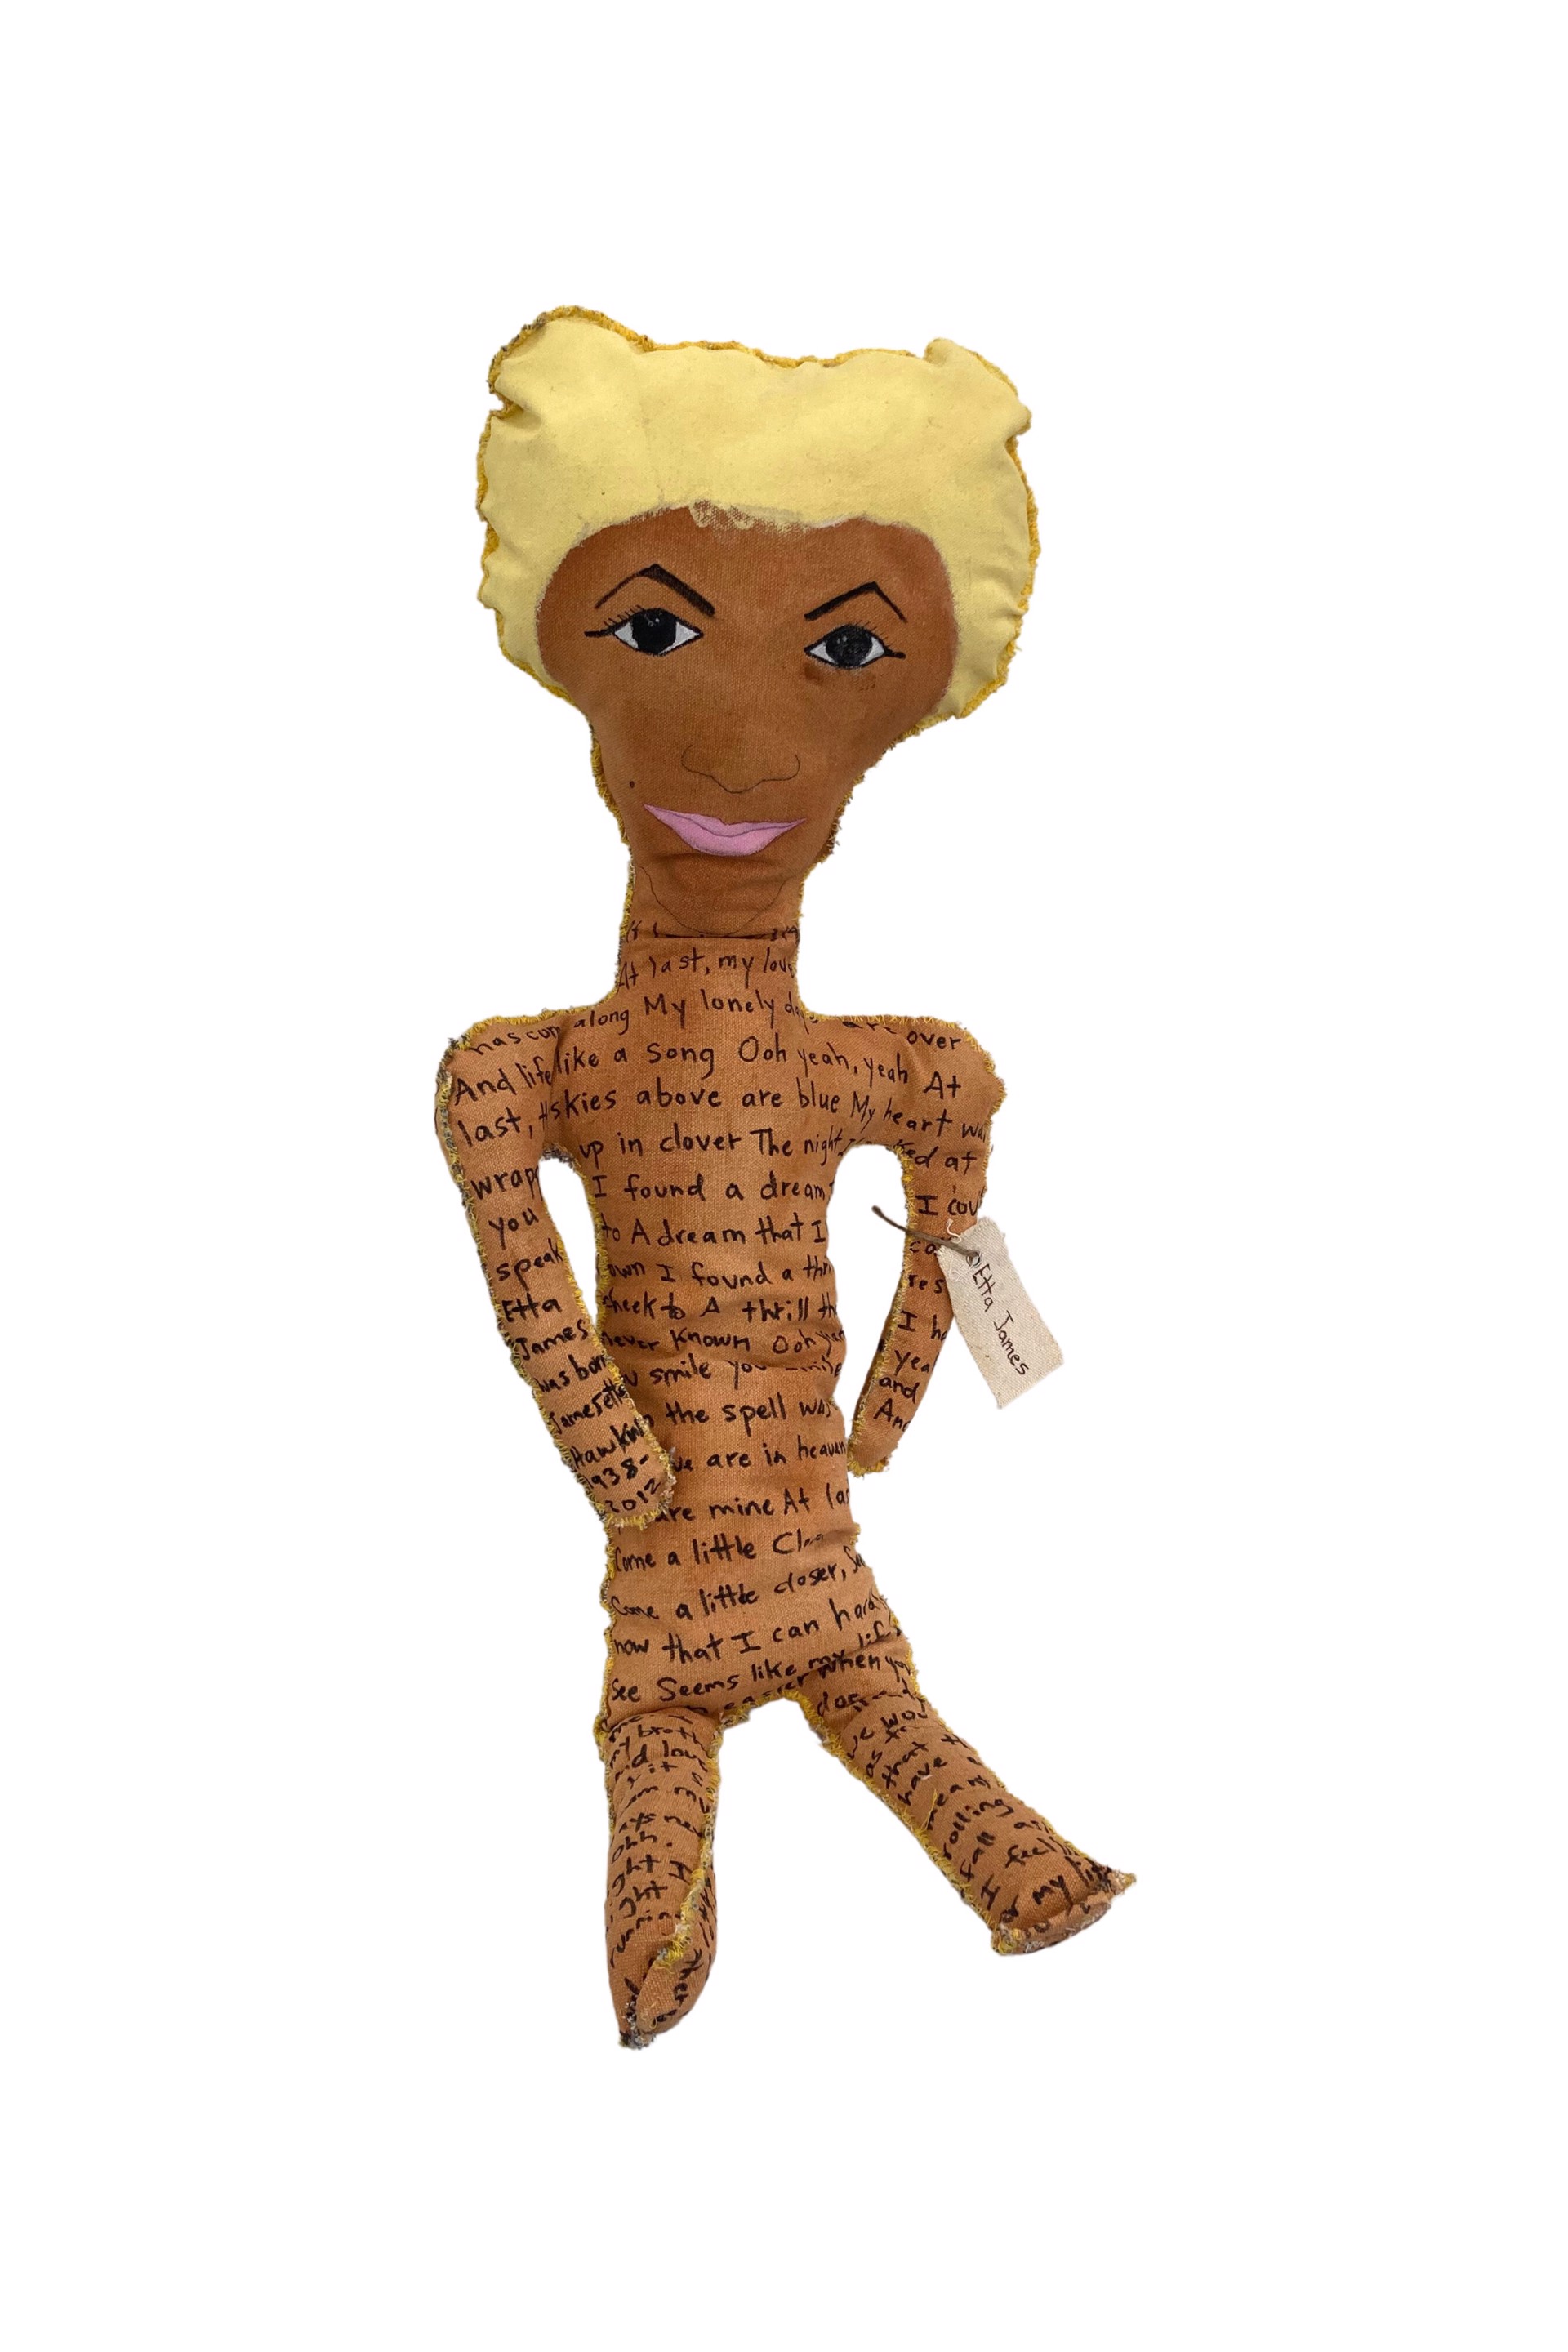 Etta James (Asylum Doll) by Susan Spangenberg